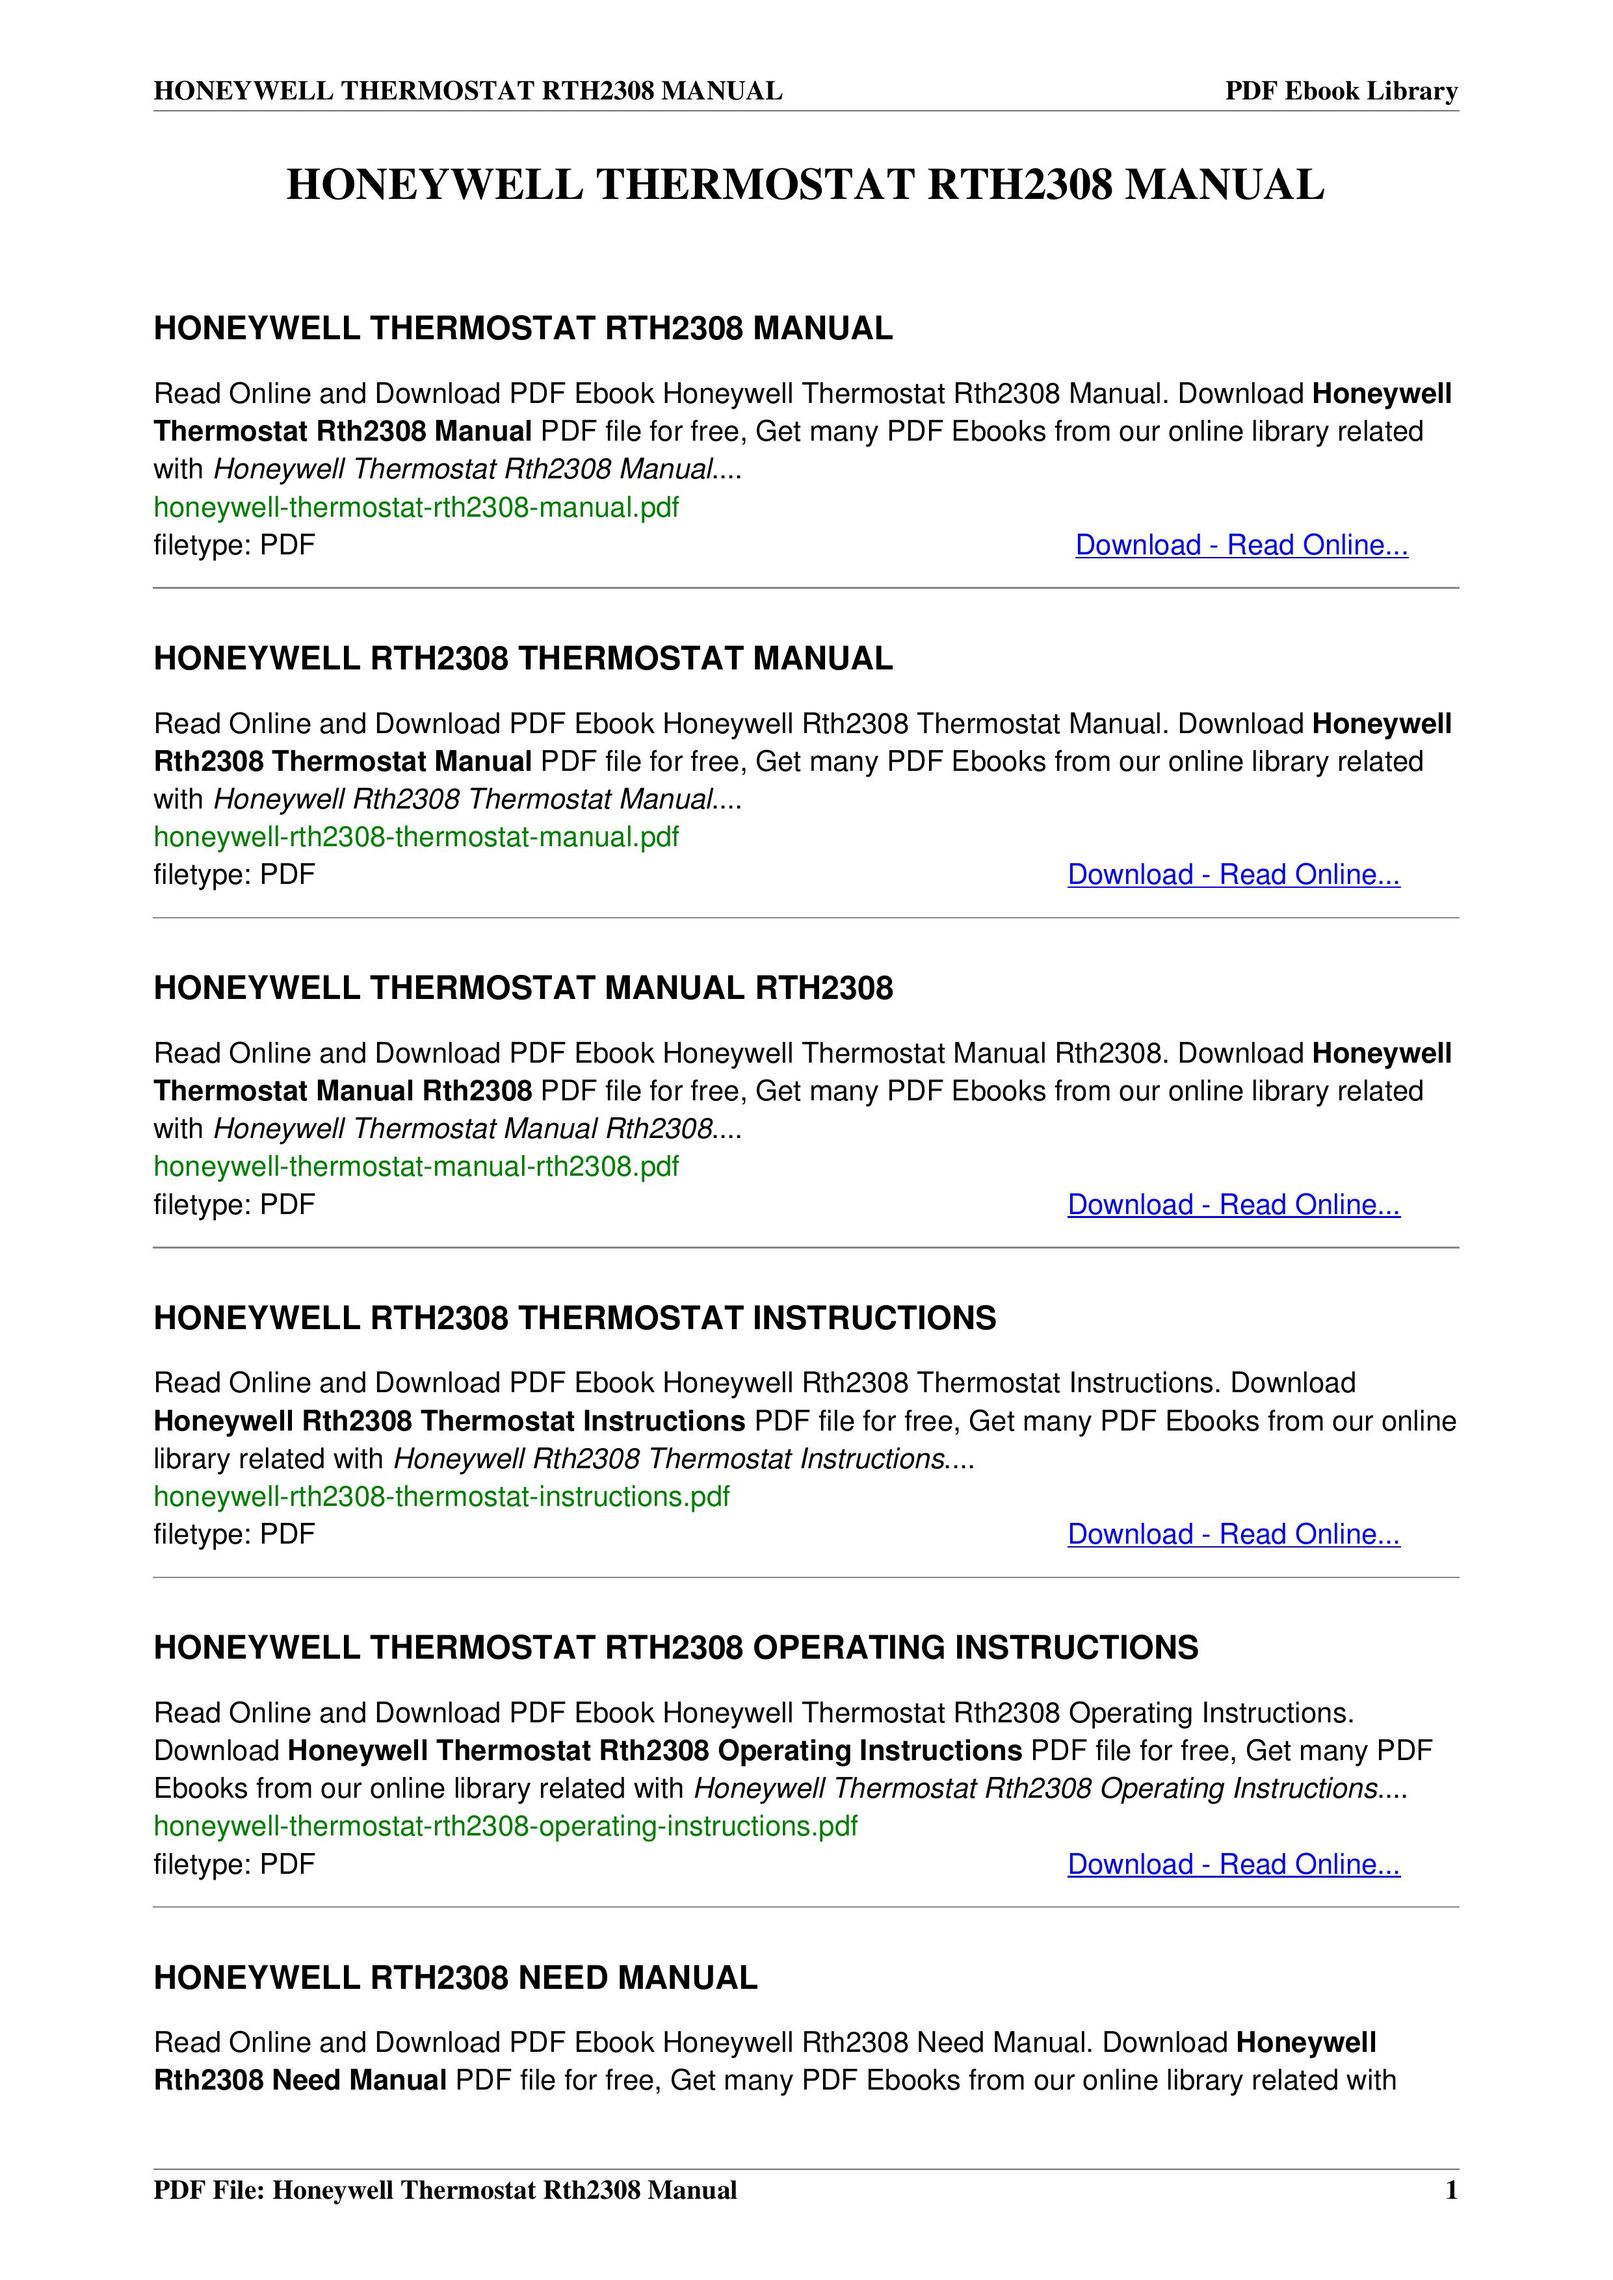 Honeywell RTH2308 eBook Reader User Manual